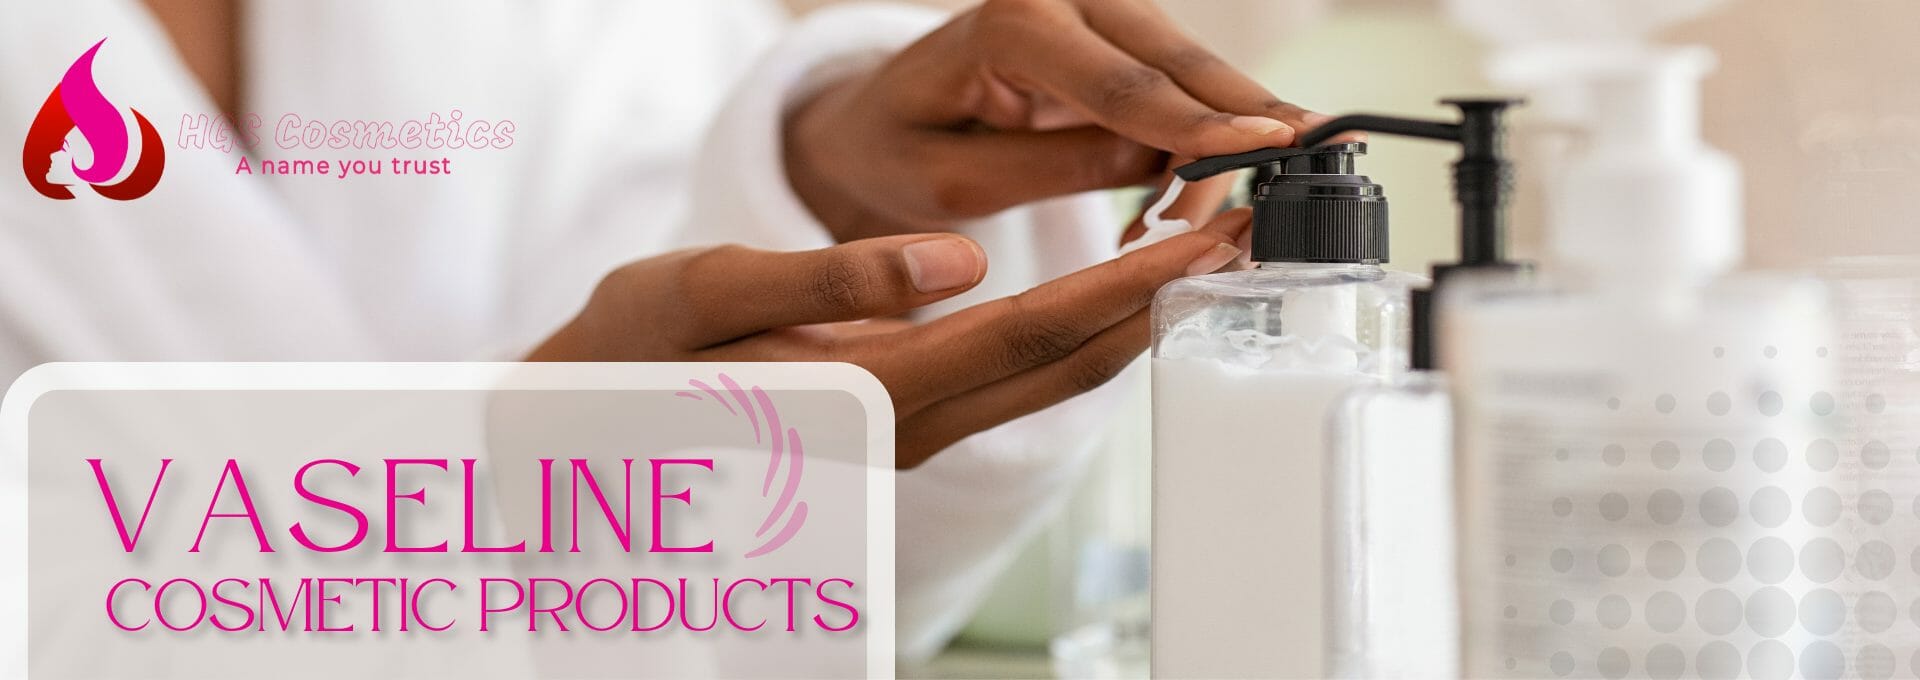 Buy Original Vaseline Products Online in Pakistan @ HGS Cosmetics